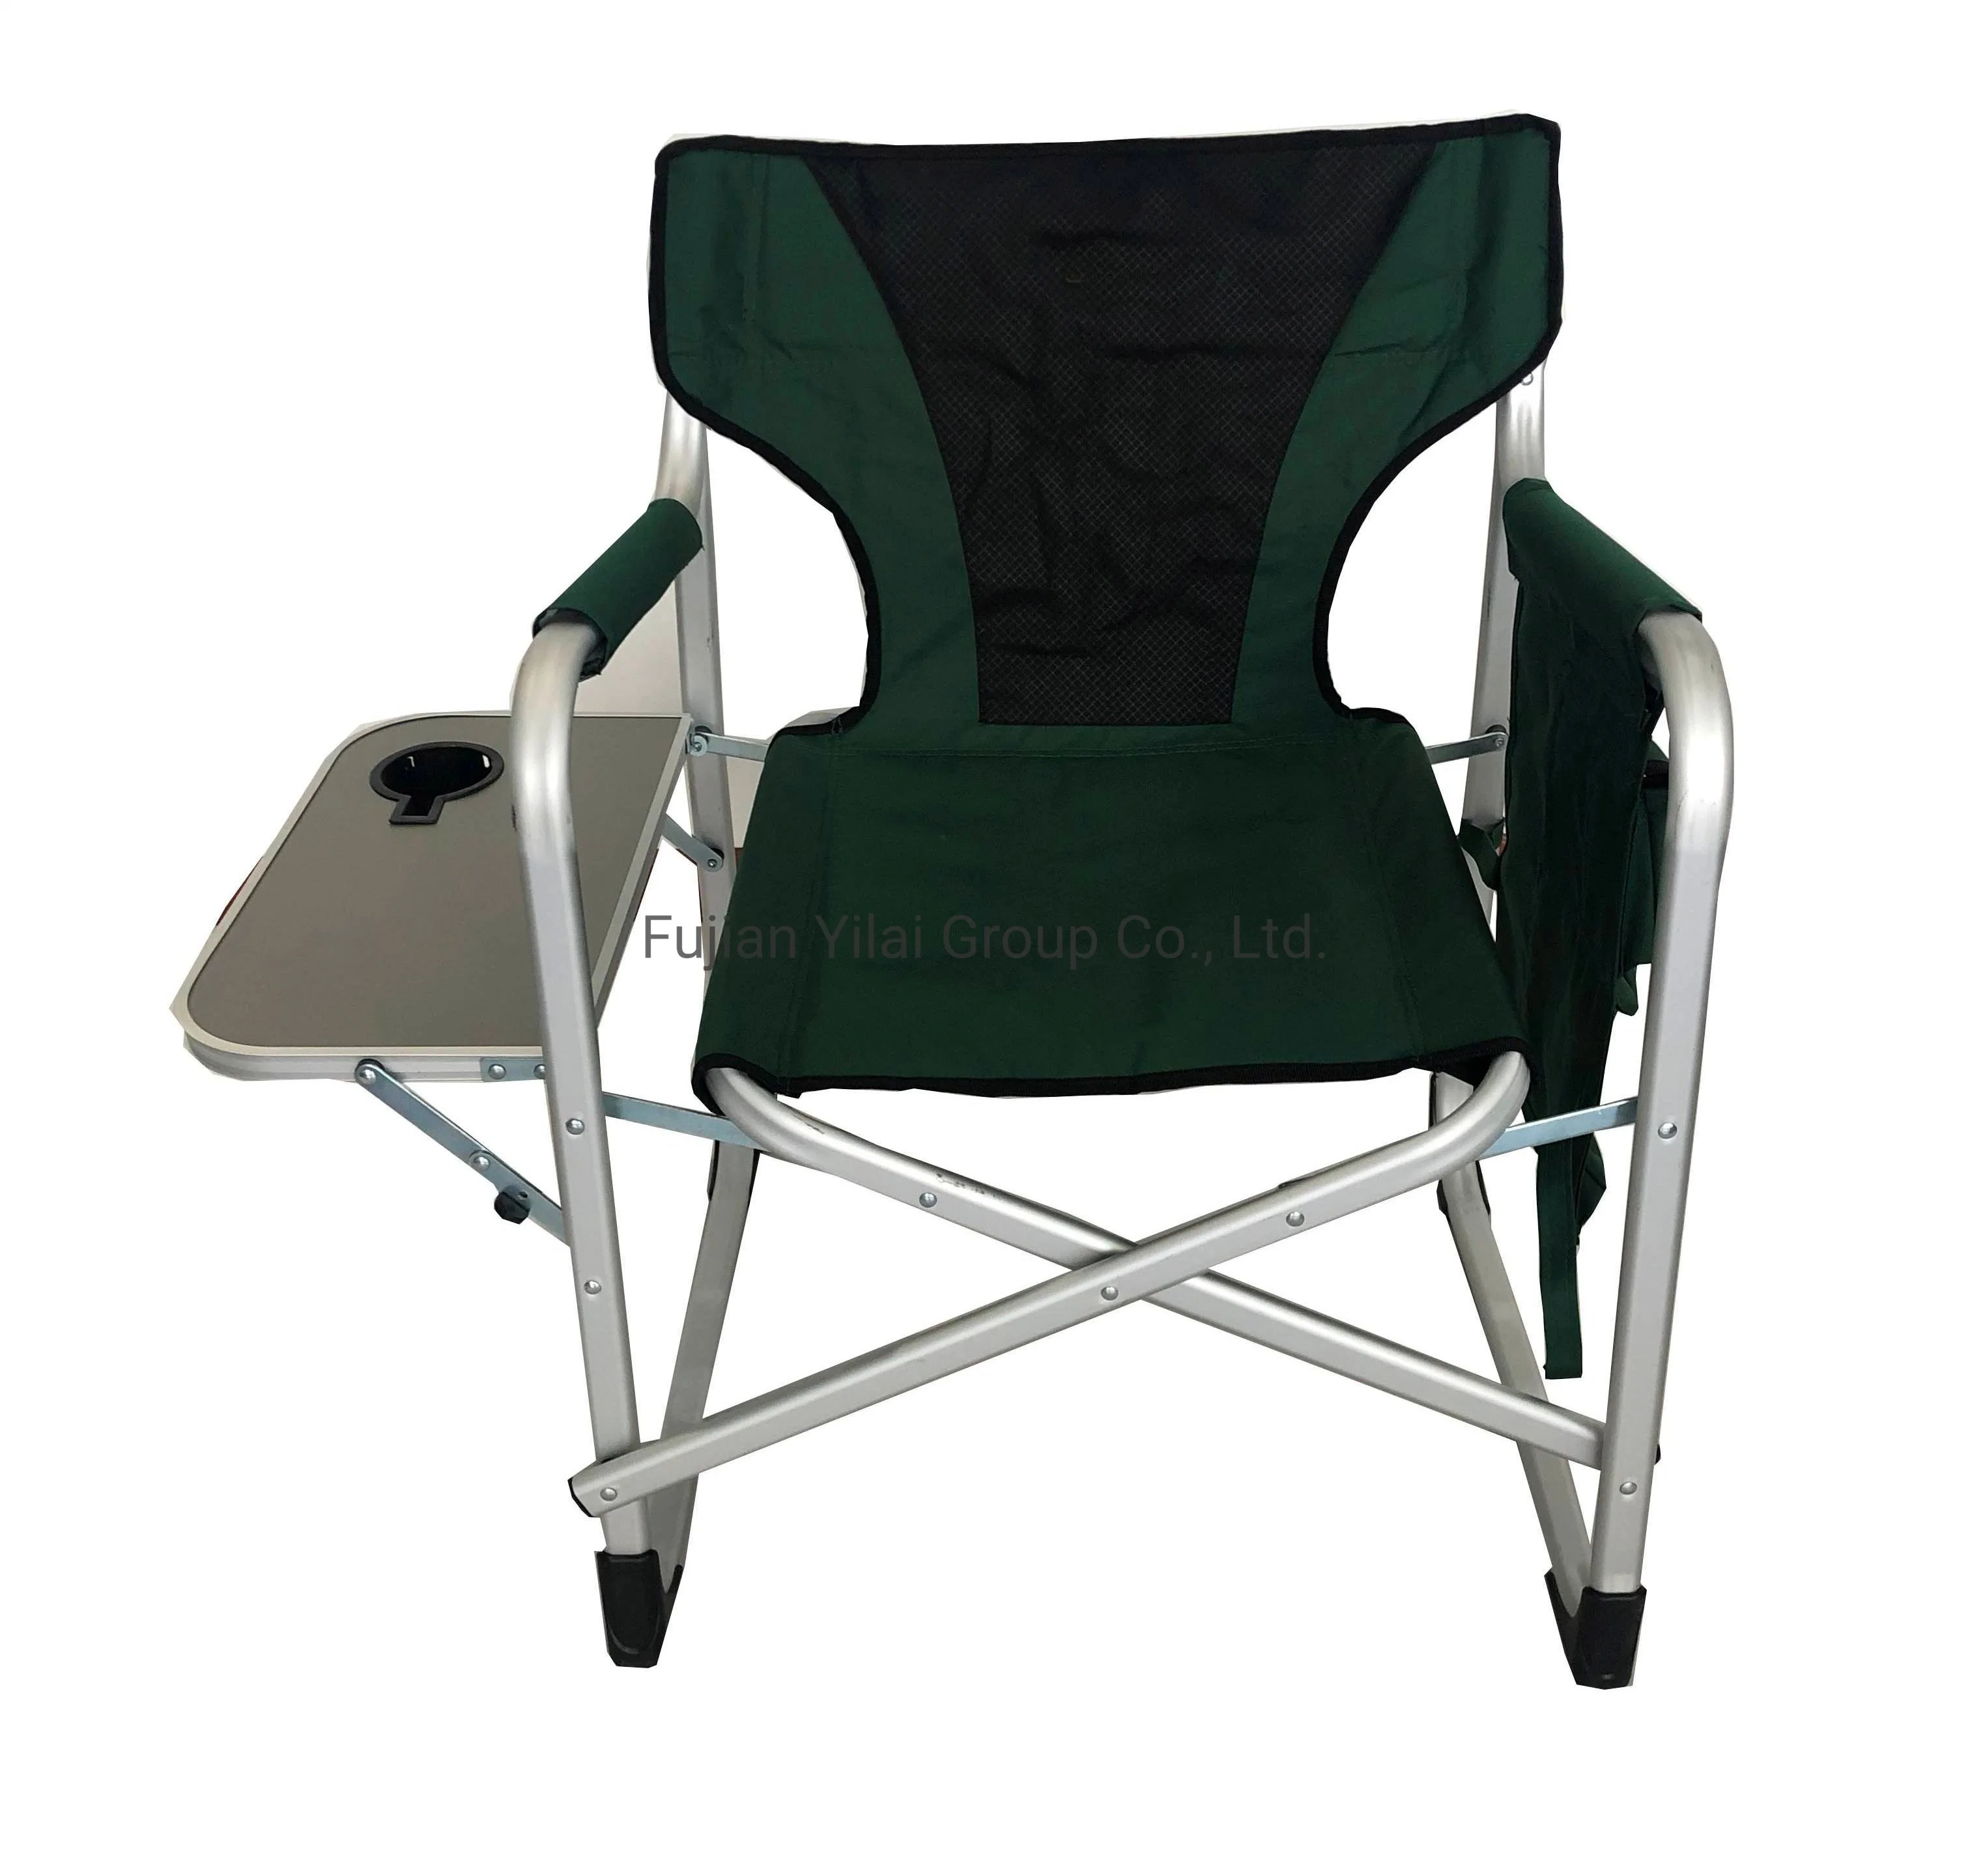 Aluminium Rahmen Portable Director Chair Lightweight Folding Camp Sports Chairs Mit Beistelltisch